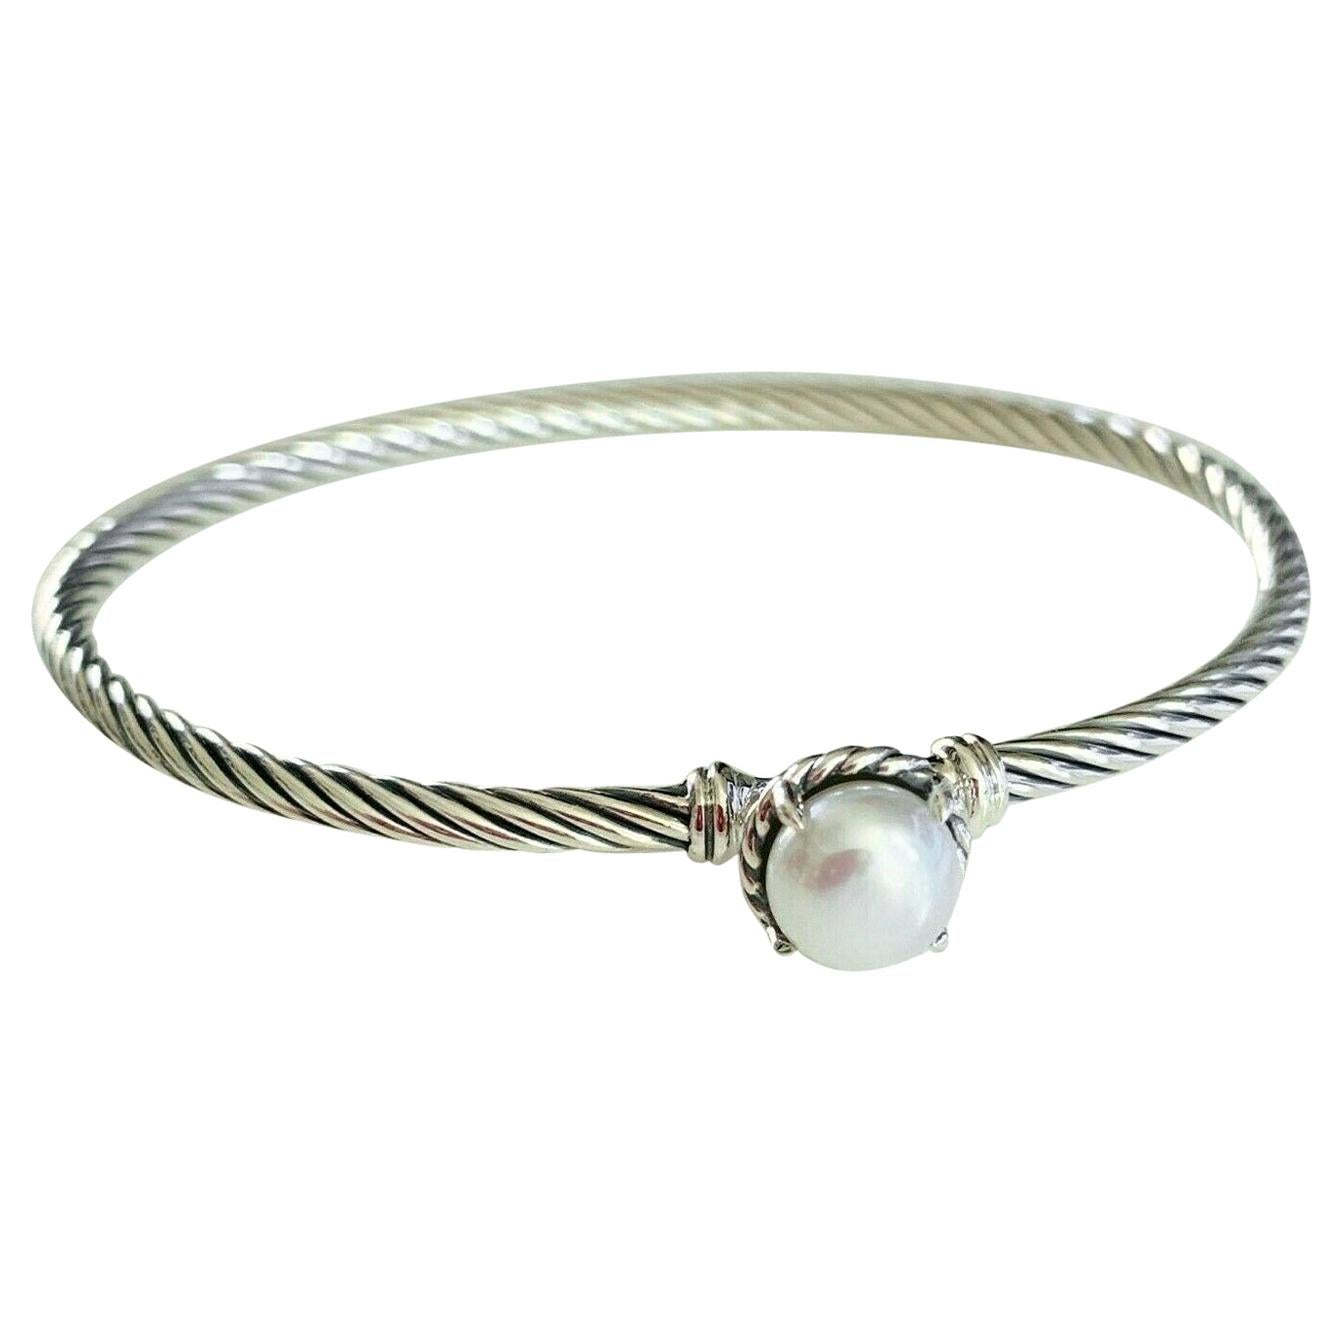 David Yurman Chatelaine Bracelet with Pearl